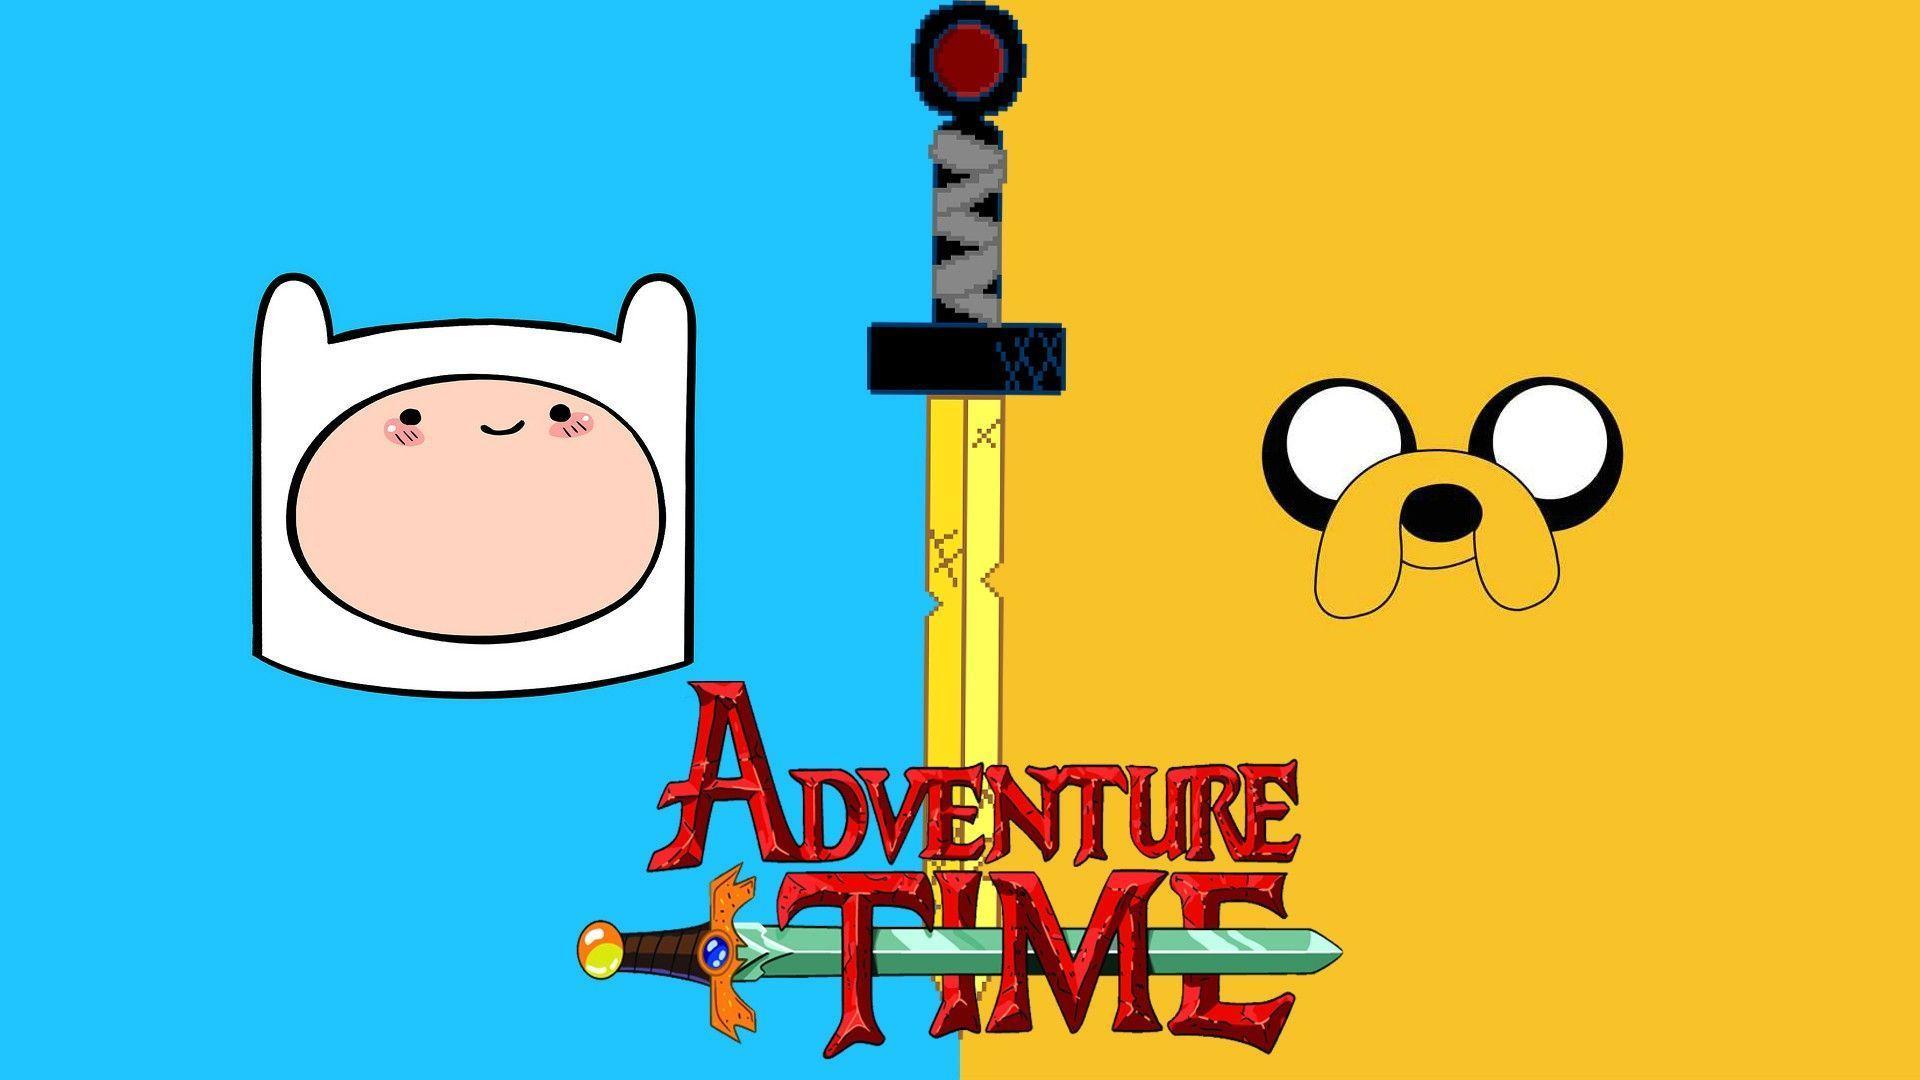 Adventure Time Desktop Background Wallpaper Panda 1920x1080PX